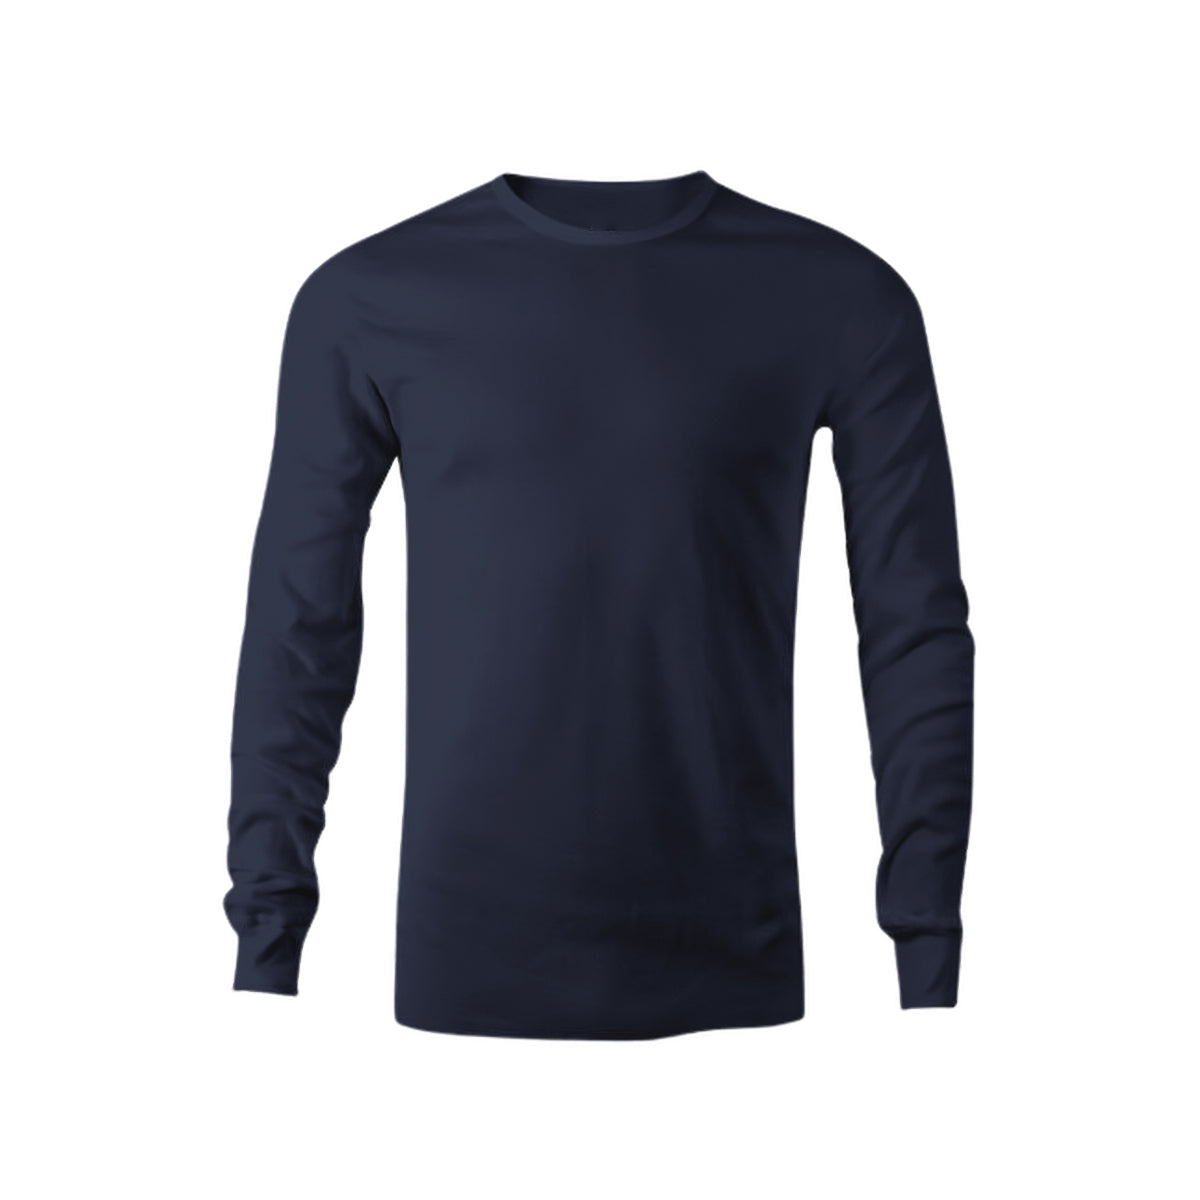 HercShirt 3.0 Max - The World's Cleanest Long Sleeve Shirt